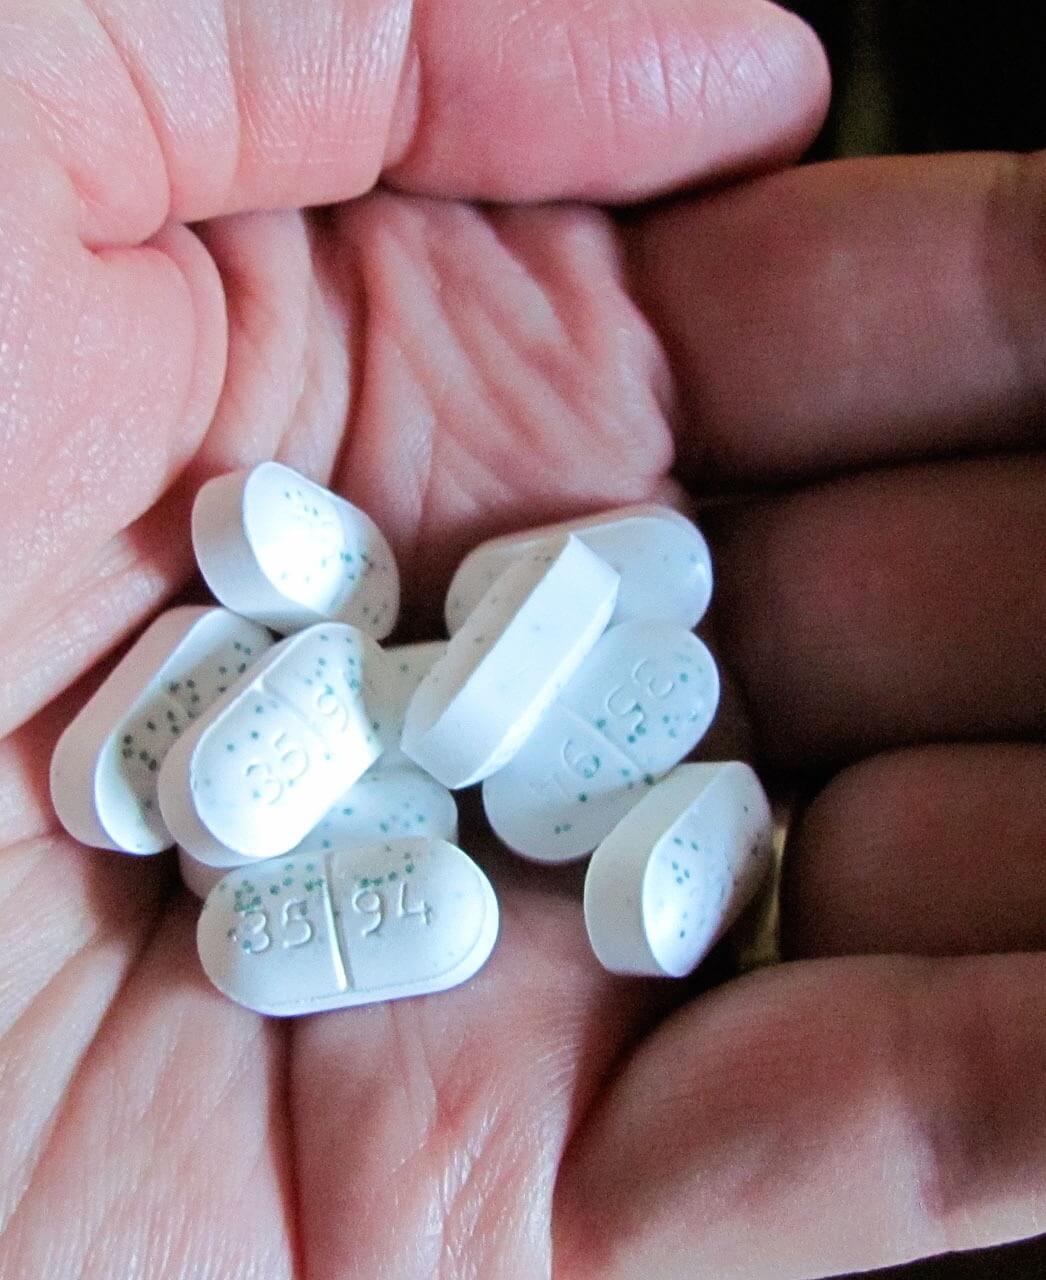 pills, drugs, hand-14550.jpg